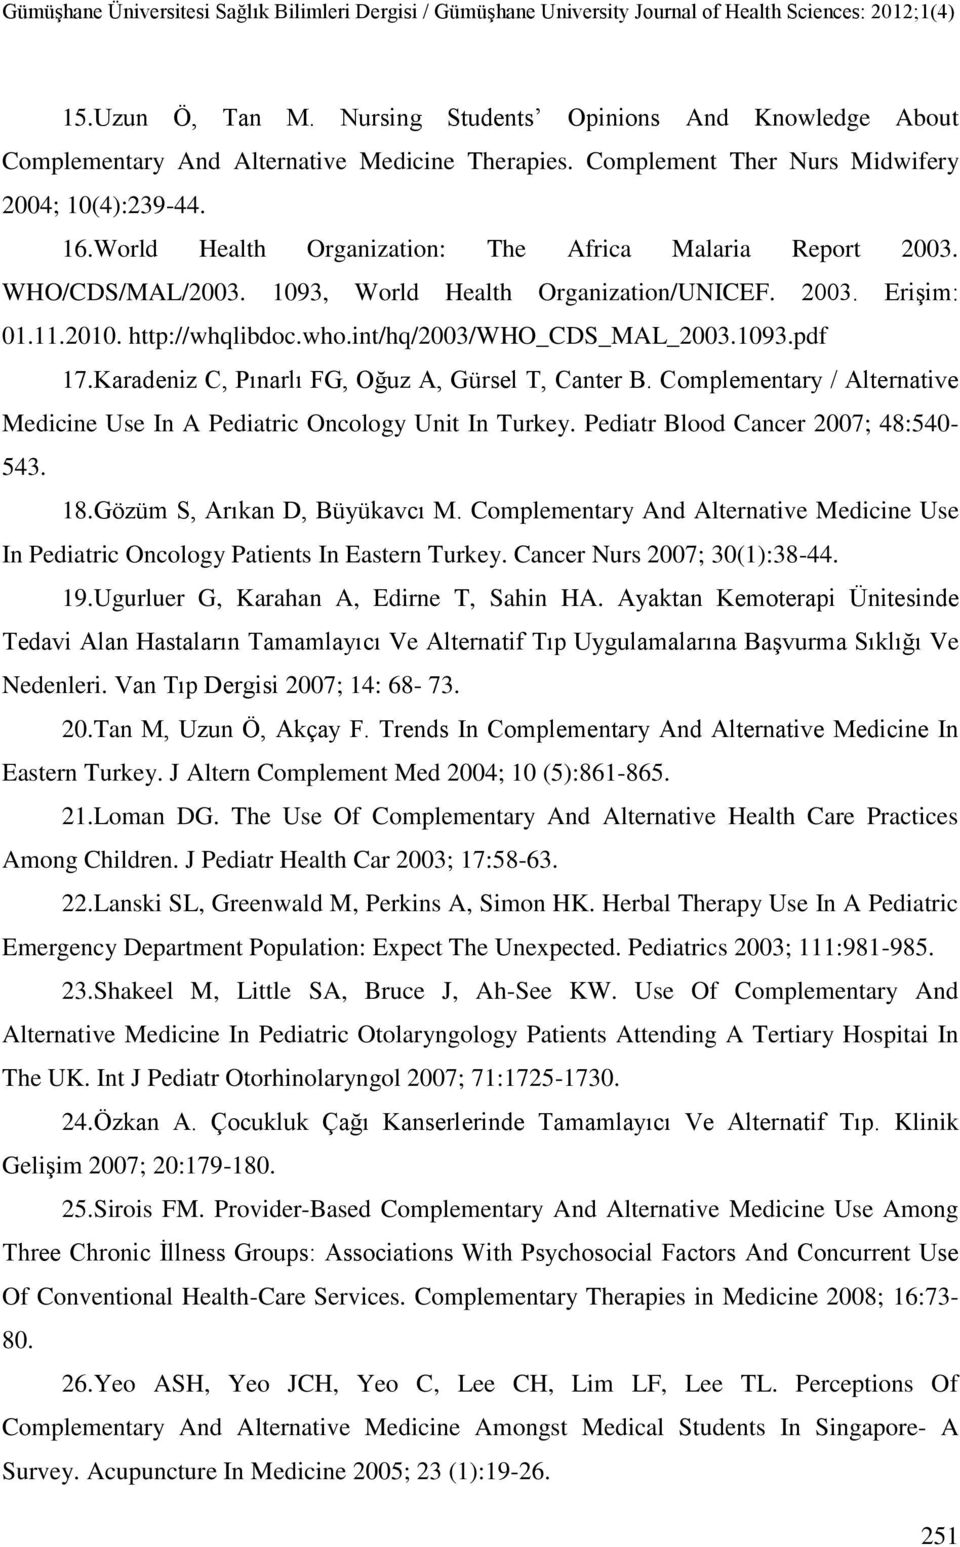 Karadeniz C, Pınarlı FG, Oğuz A, Gürsel T, Canter B. Complementary / Alternative Medicine Use In A Pediatric Oncology Unit In Turkey. Pediatr Blood Cancer 2007; 48:540-543. 18.